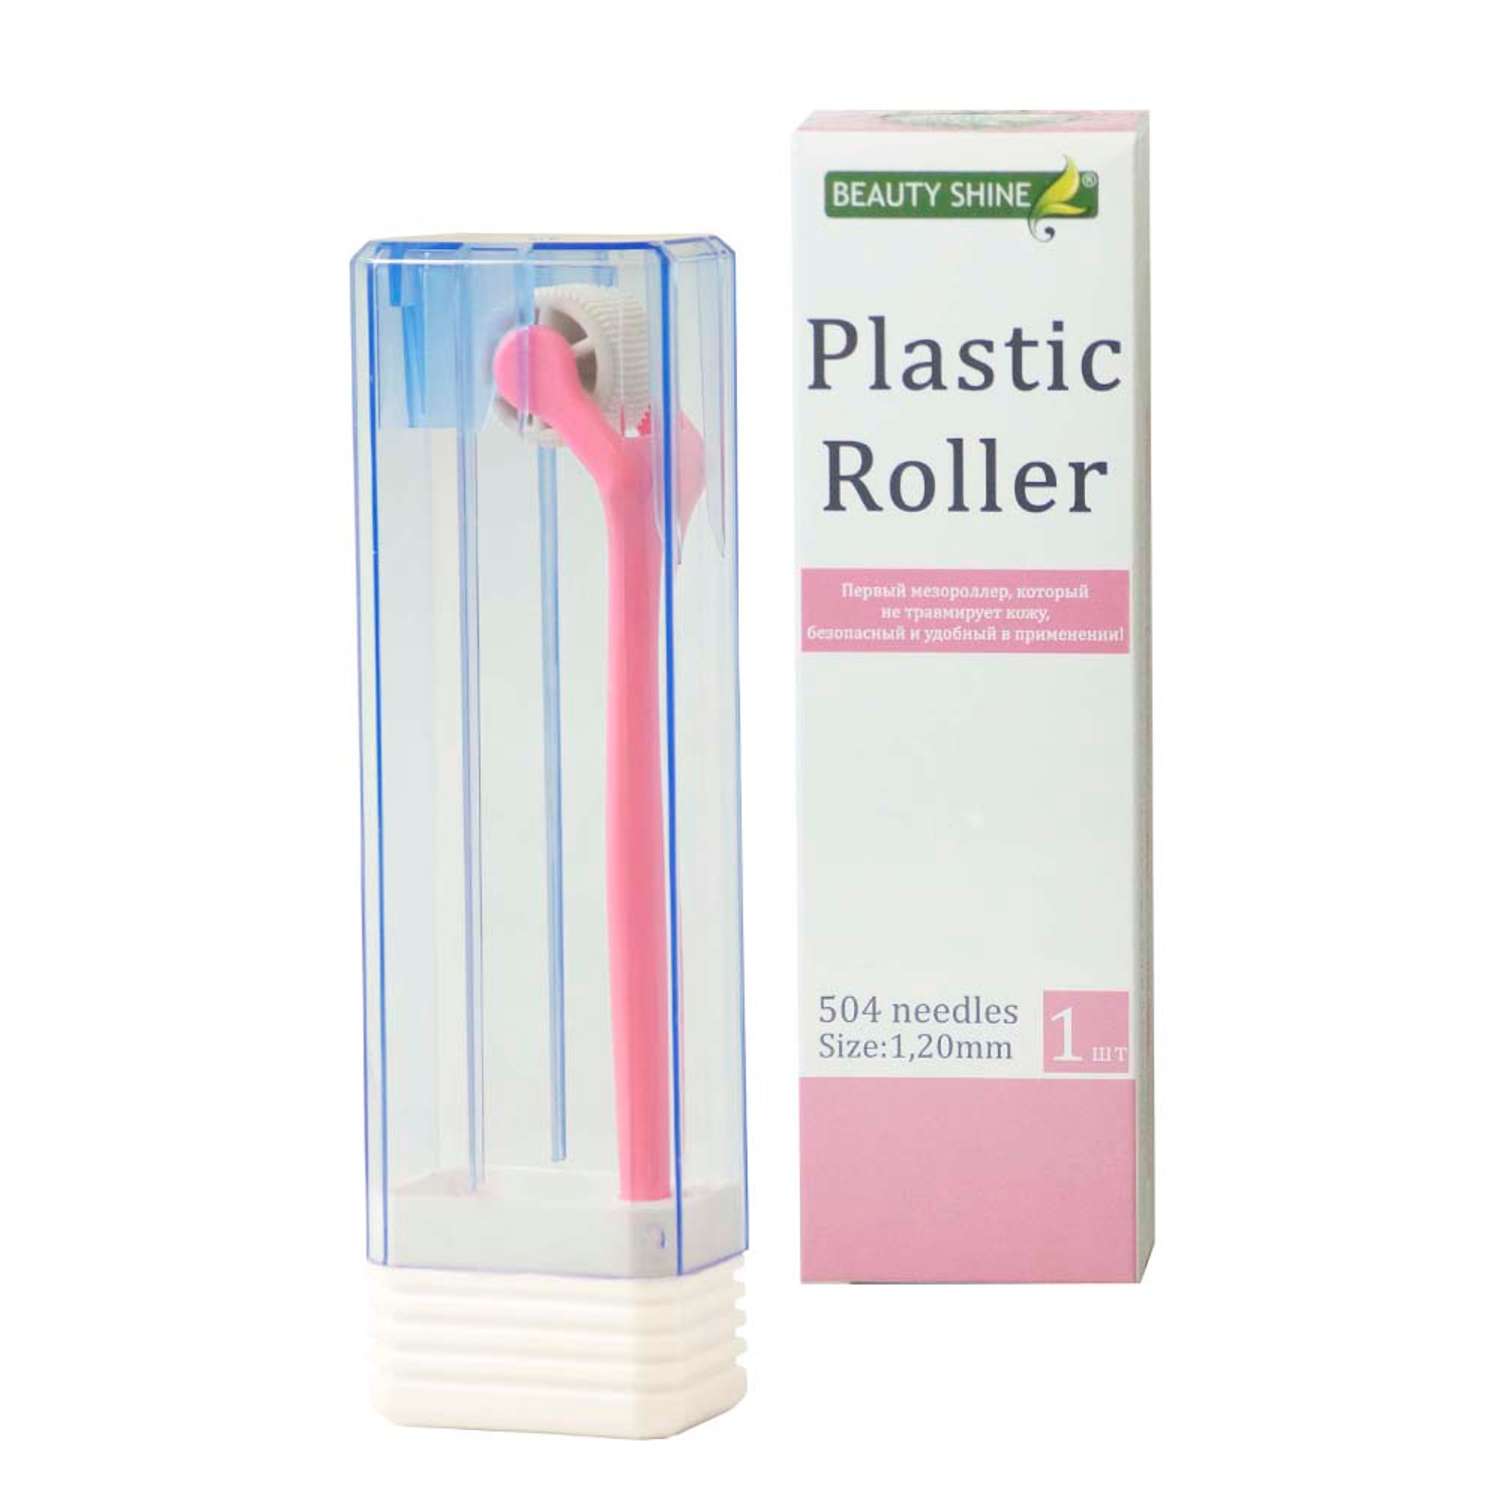 Мезороллер Beauty Shine Plastic Roller 504 иглы/ 1.2 мм - фото 1